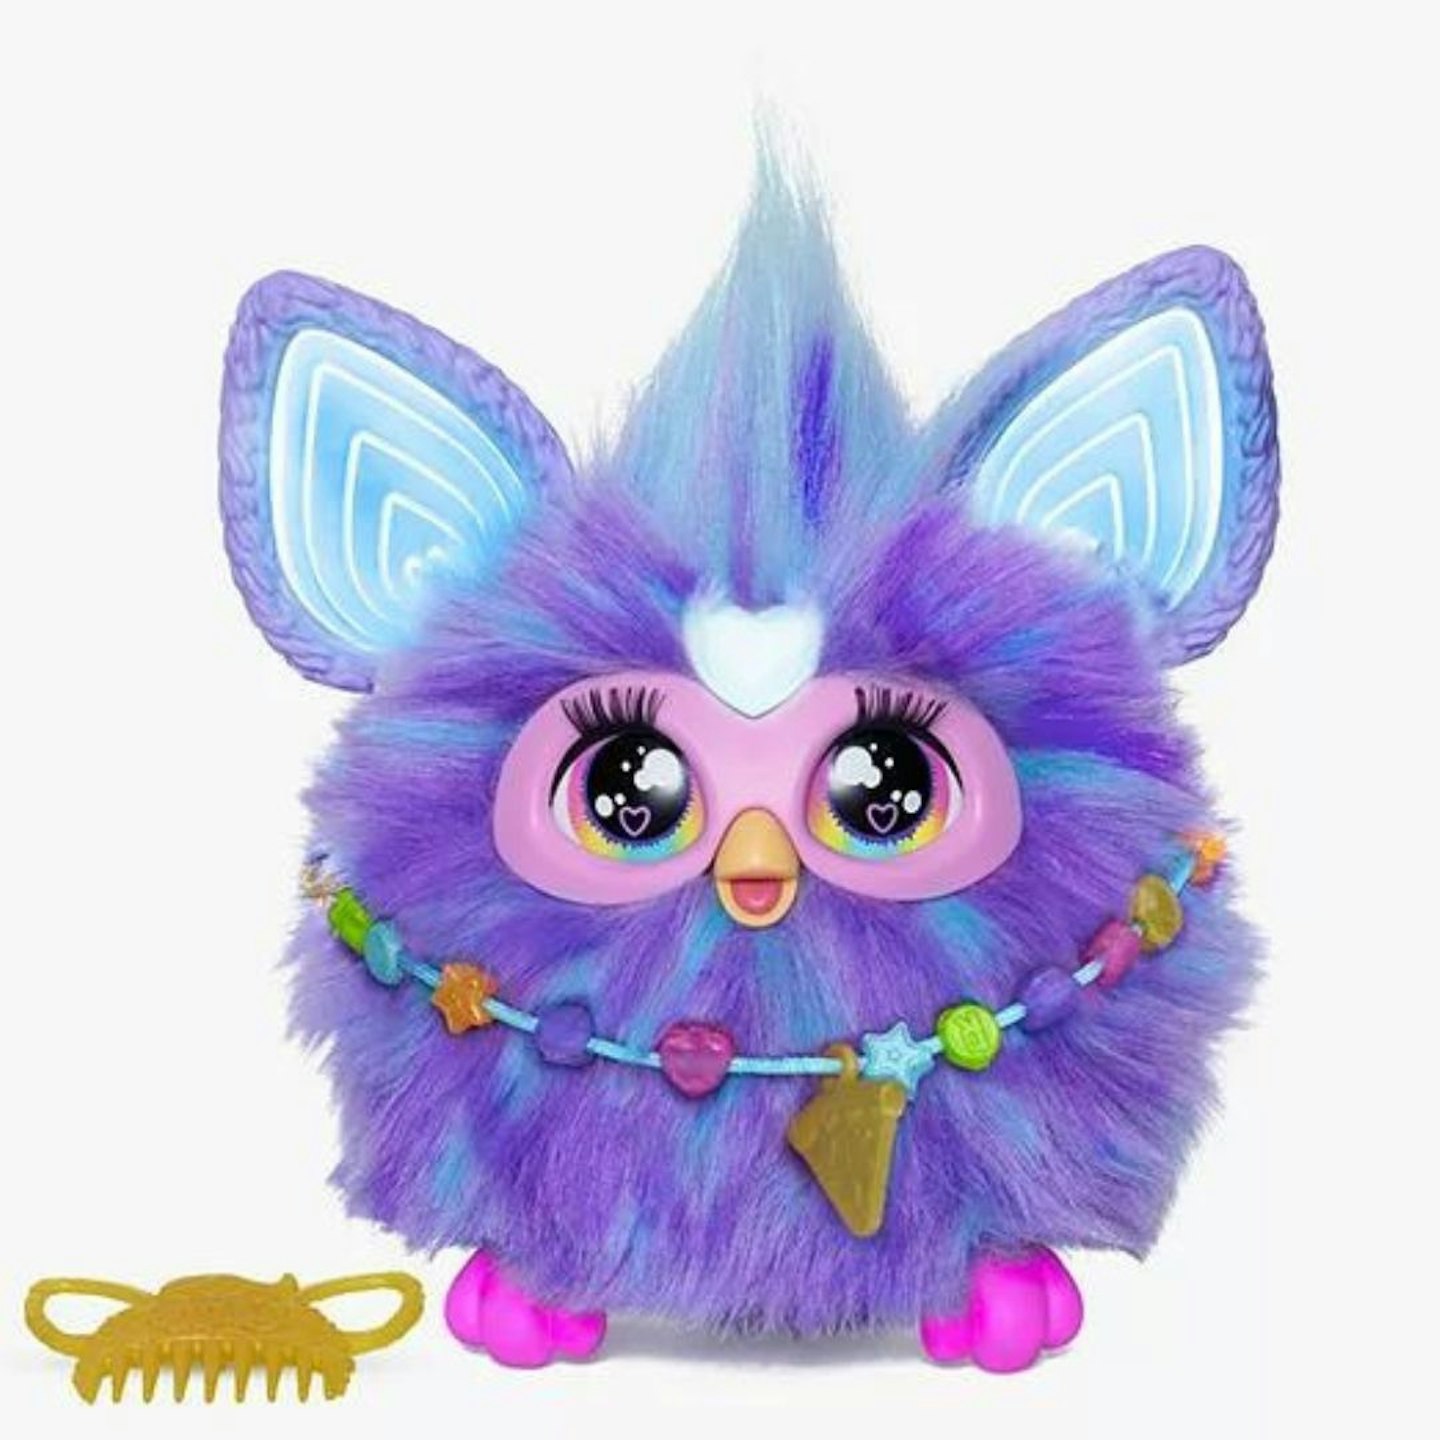 The Top Ten John Lewis Christmas Toys: Furby Purple Plush Interactive Toy